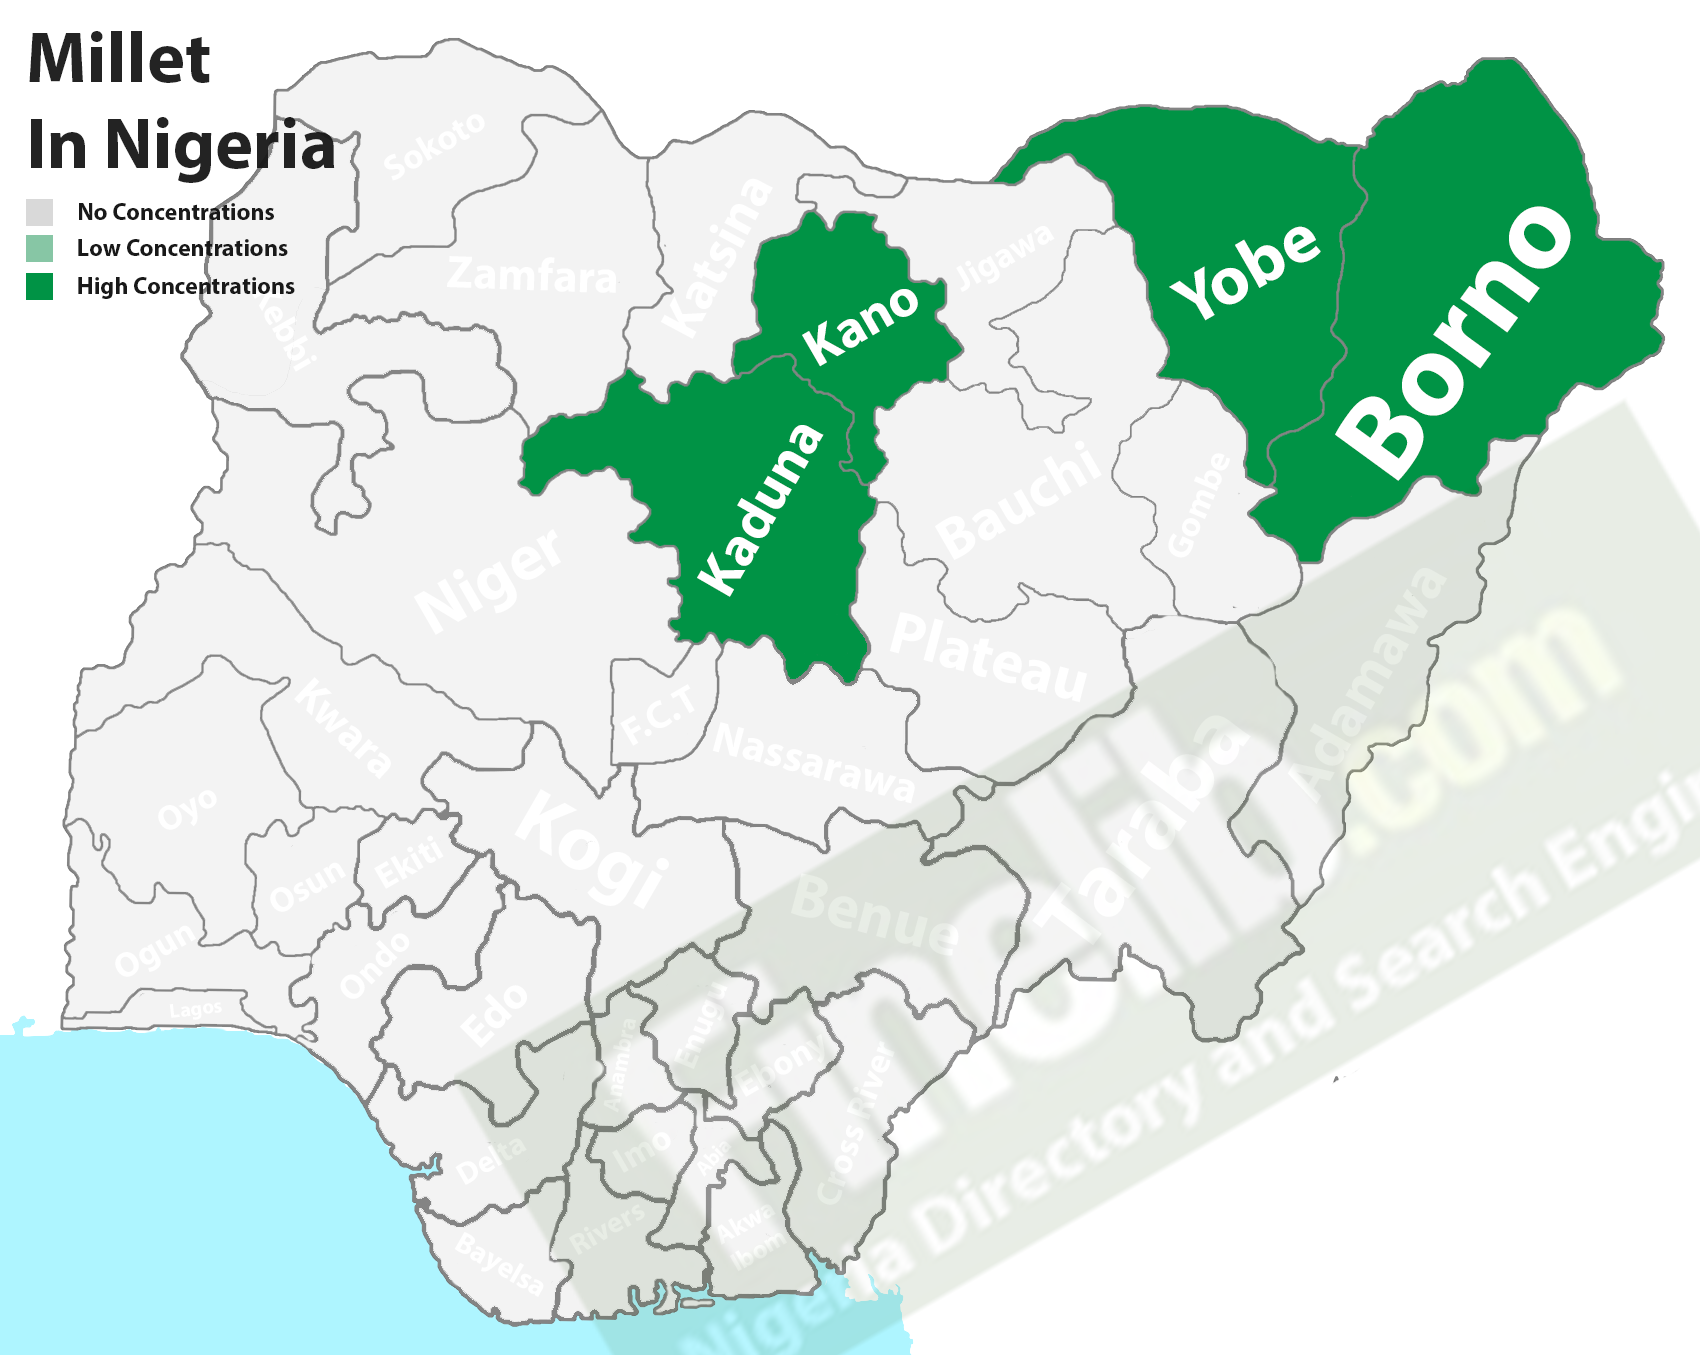 Millet cash crop producing states in Nigeria